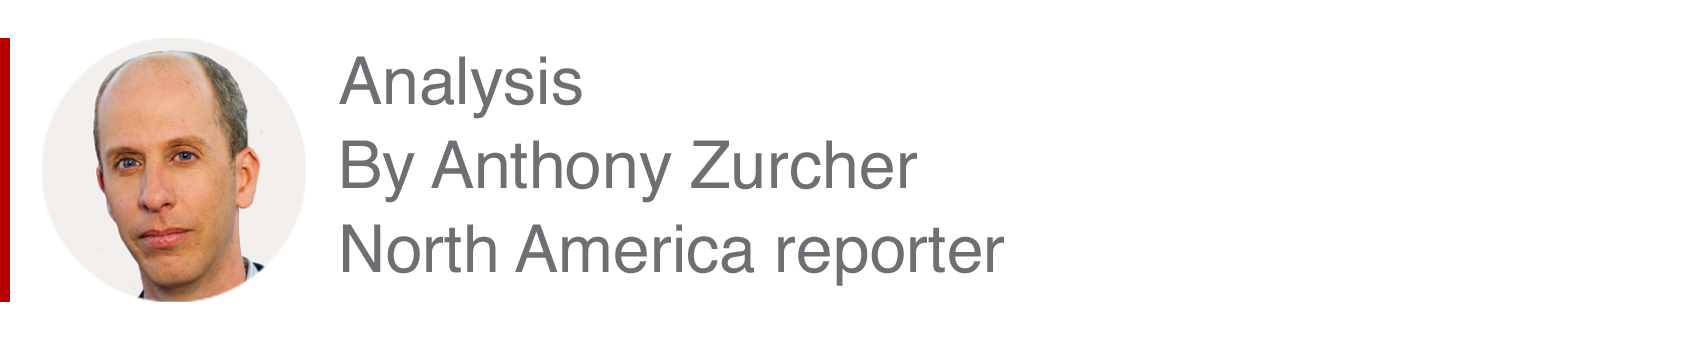 Analysis box by Anthony Zurcher, North America reporter